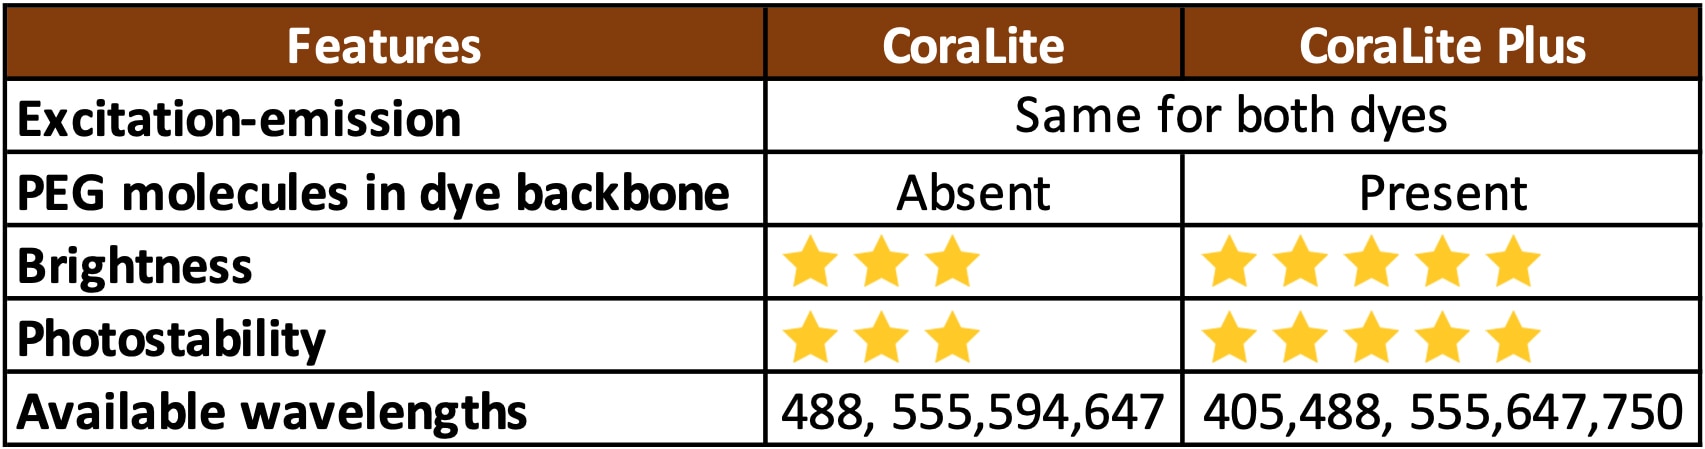 Comparison between CoraLite and CoraLite Plus